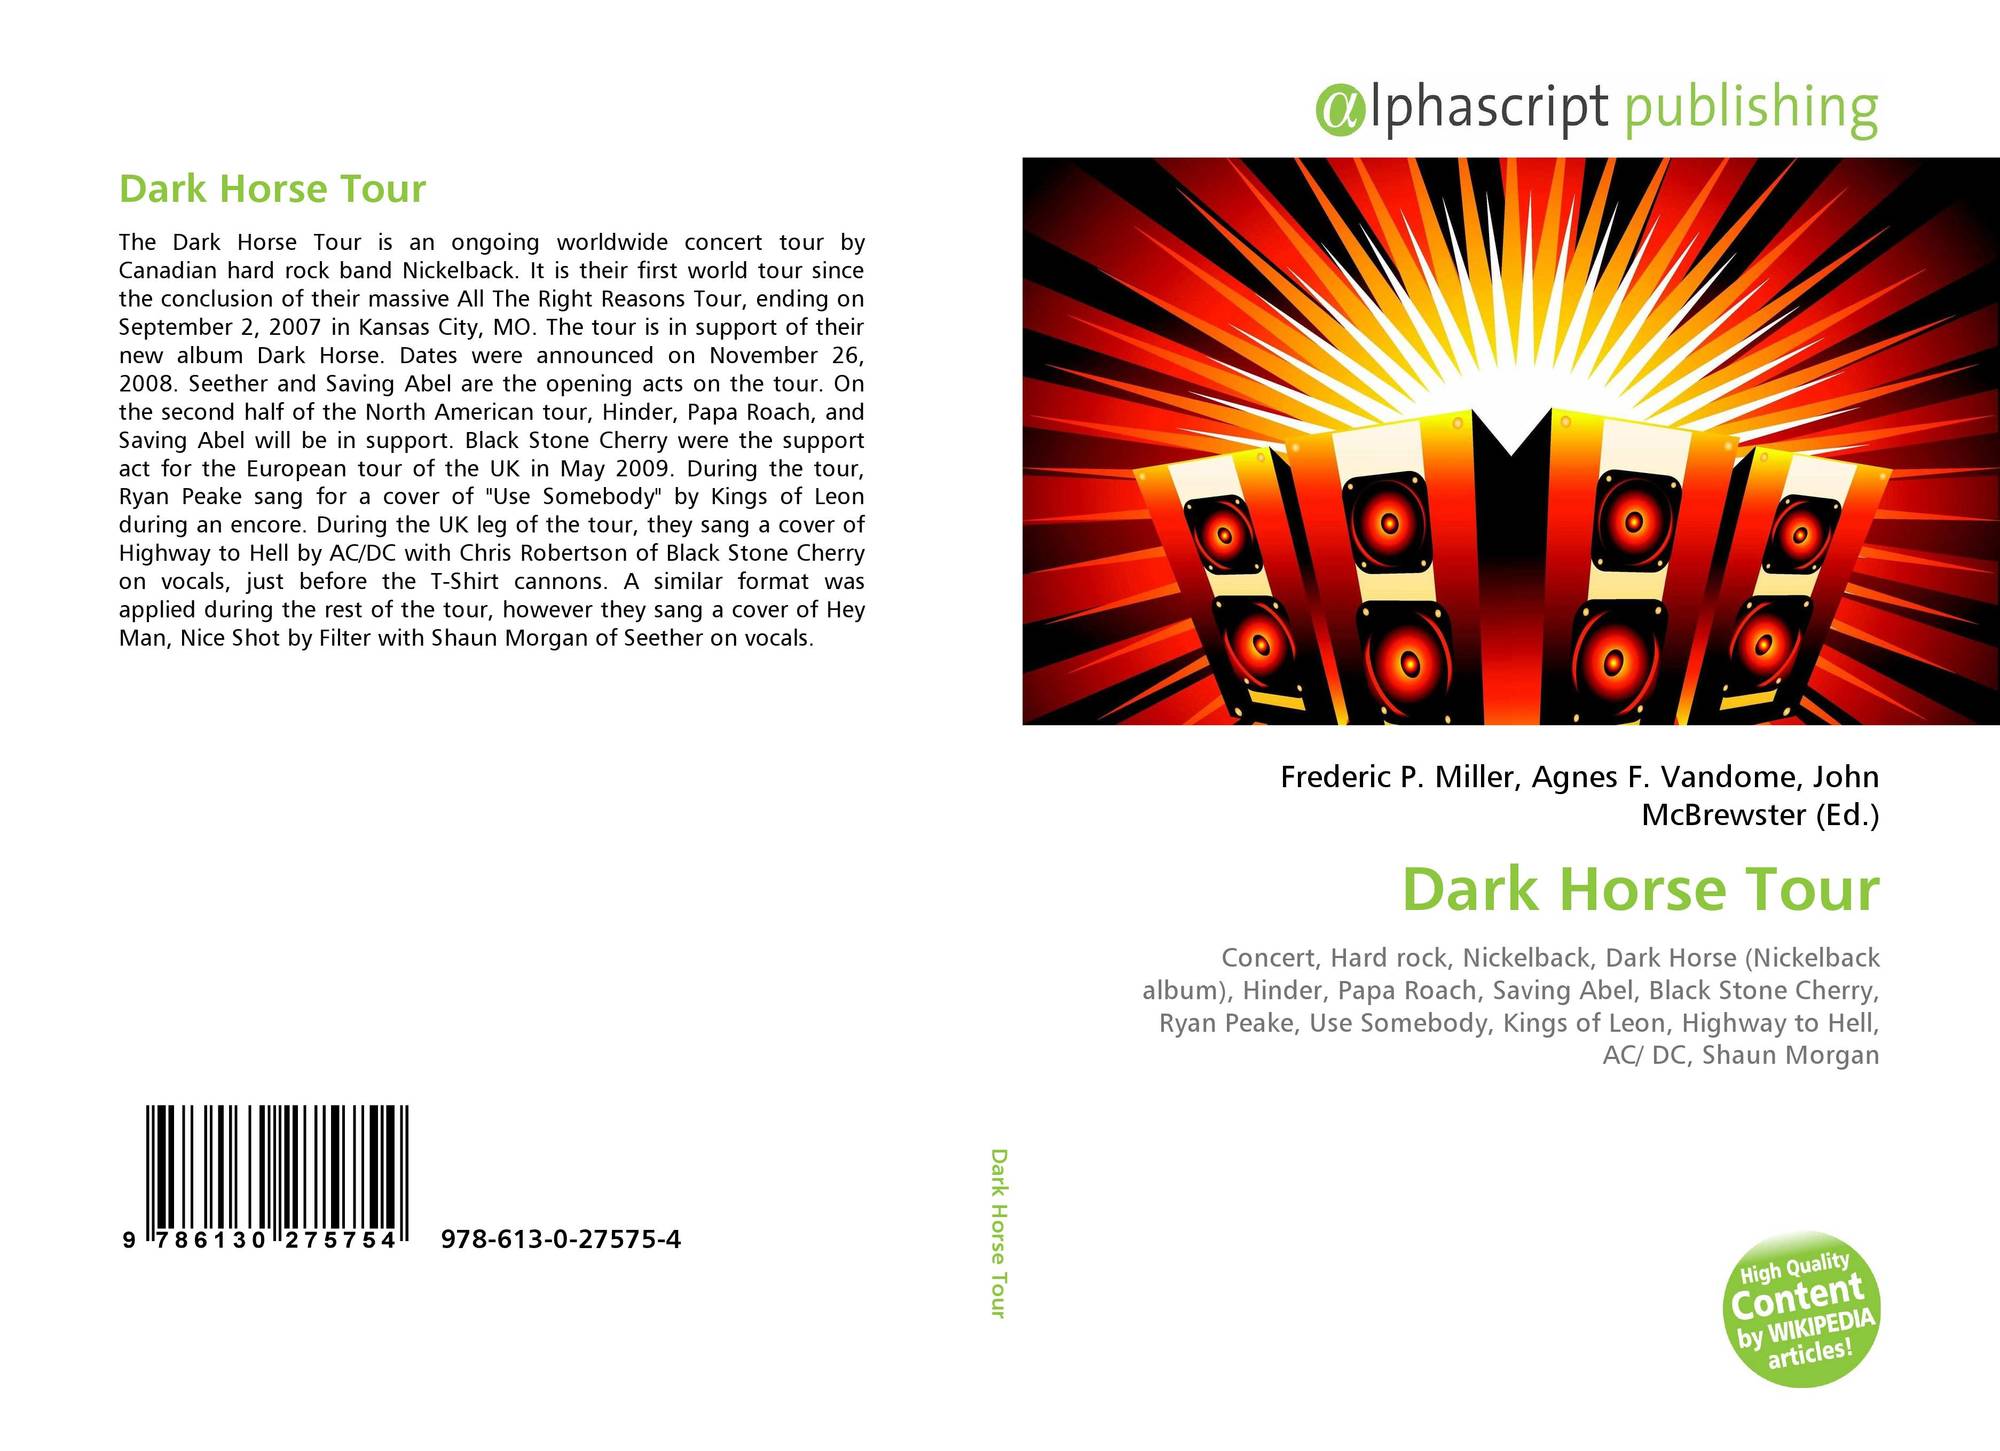 dark horse nickelback album